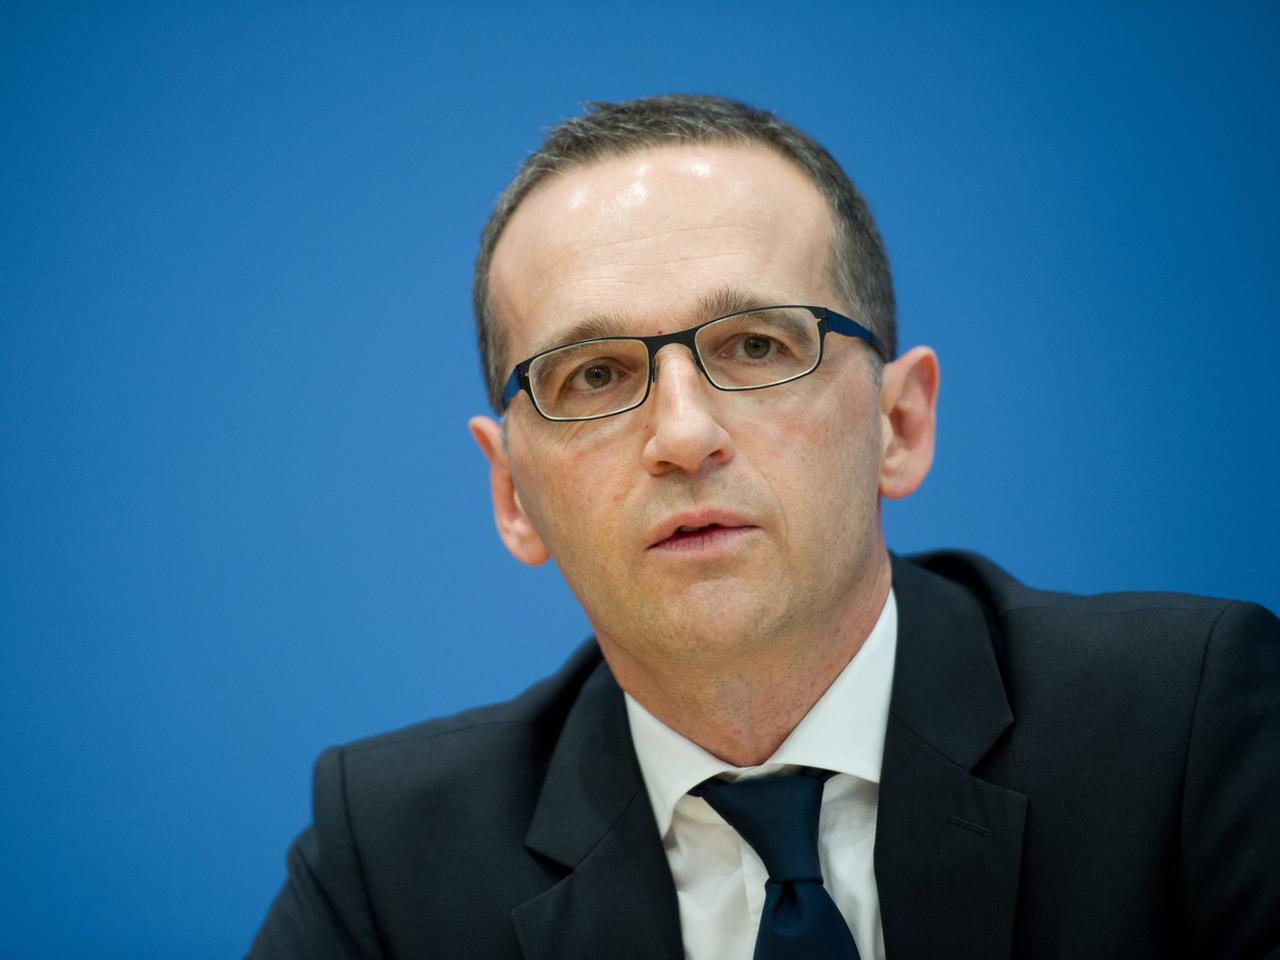 Bundesjustizminister Heiko Maas, SPD, im November 2014